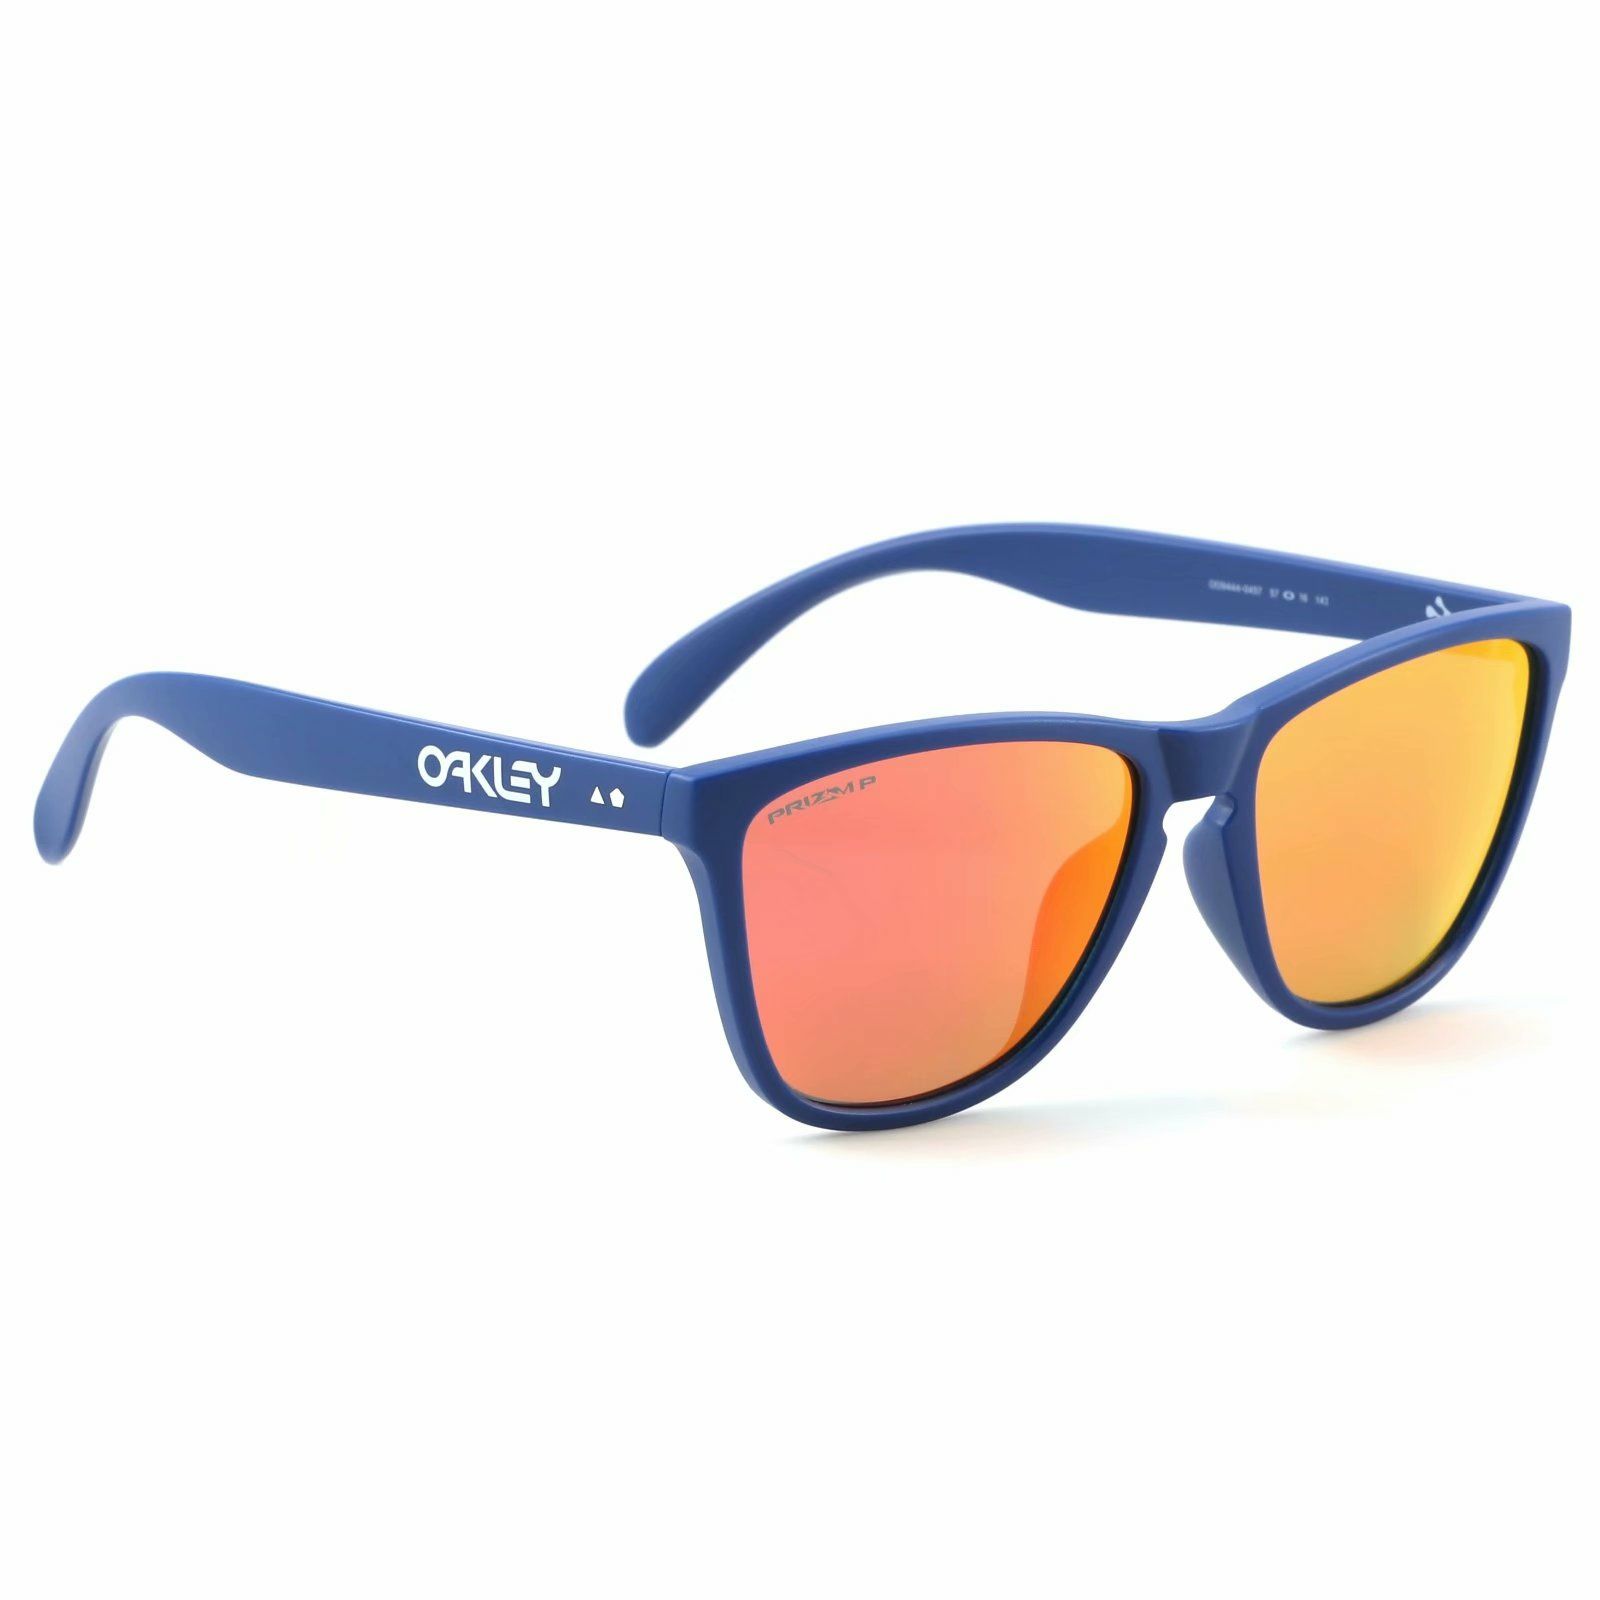 Oakley (USA) - Frogskins 35th Anniversary - Стильные очки